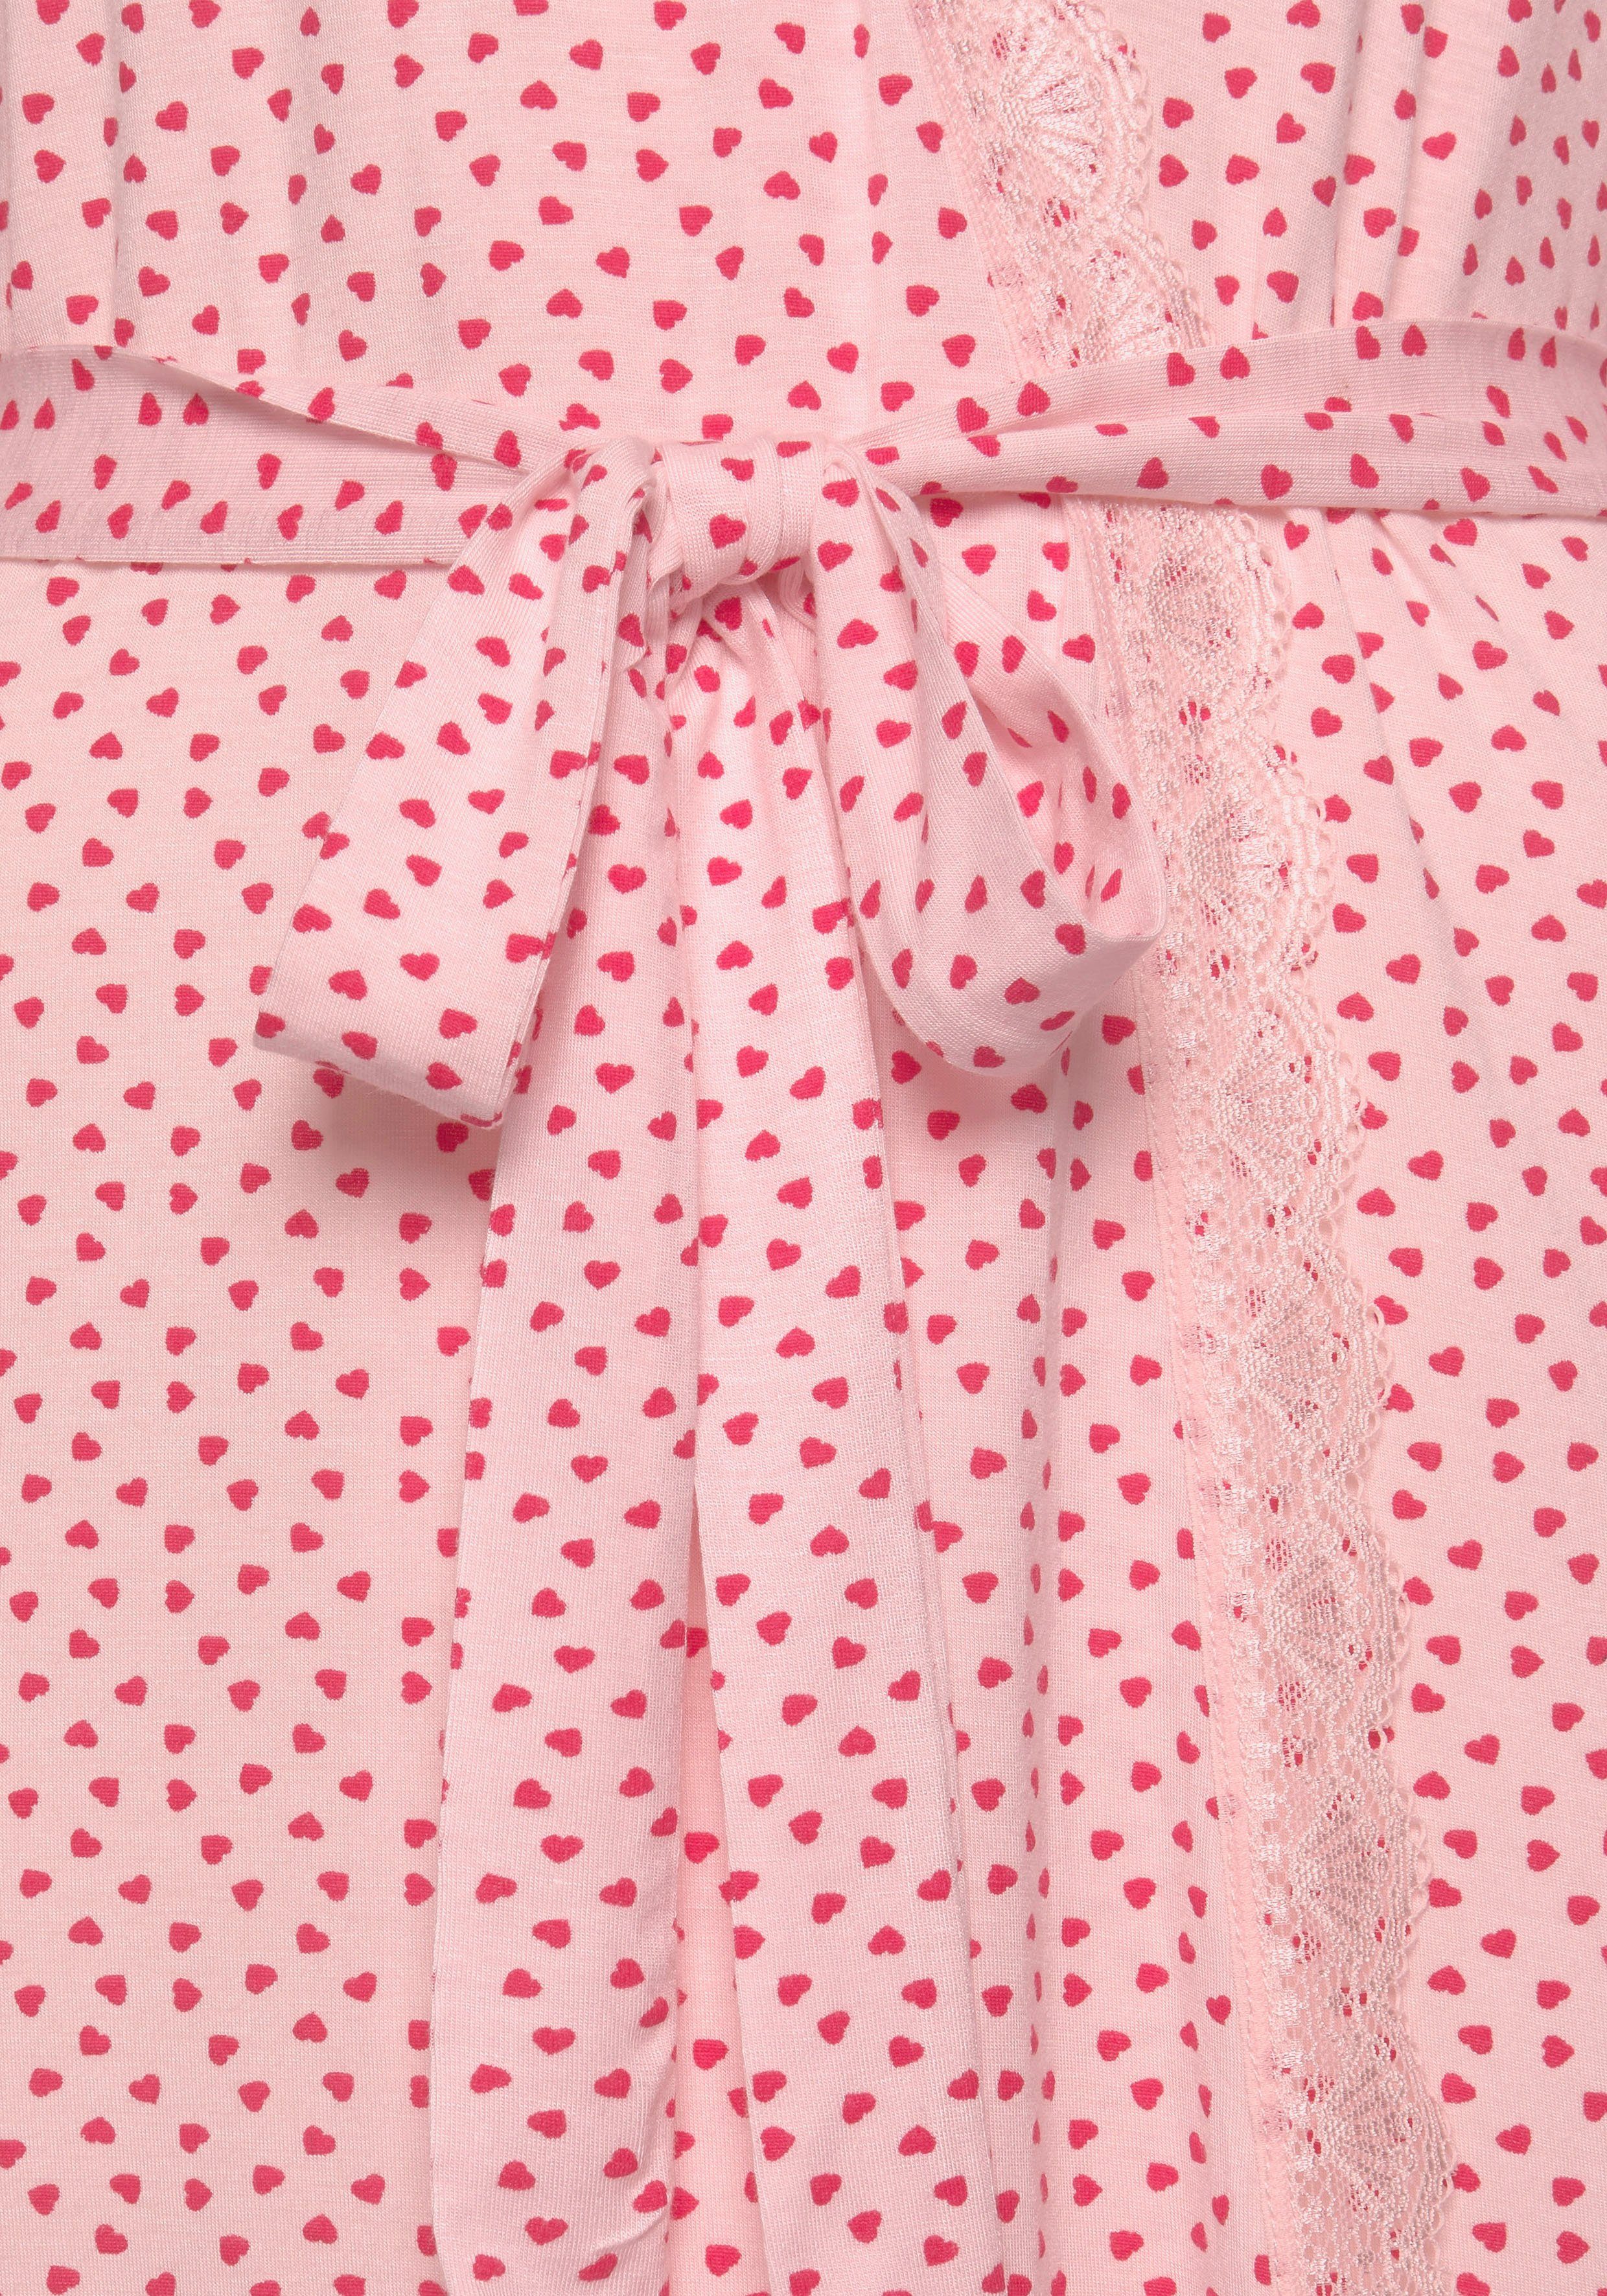 s.Oliver Kimono, hellrosa-gemustert mit Kurzform, Spitze Single-Jersey, Gürtel, Herzchendruck und